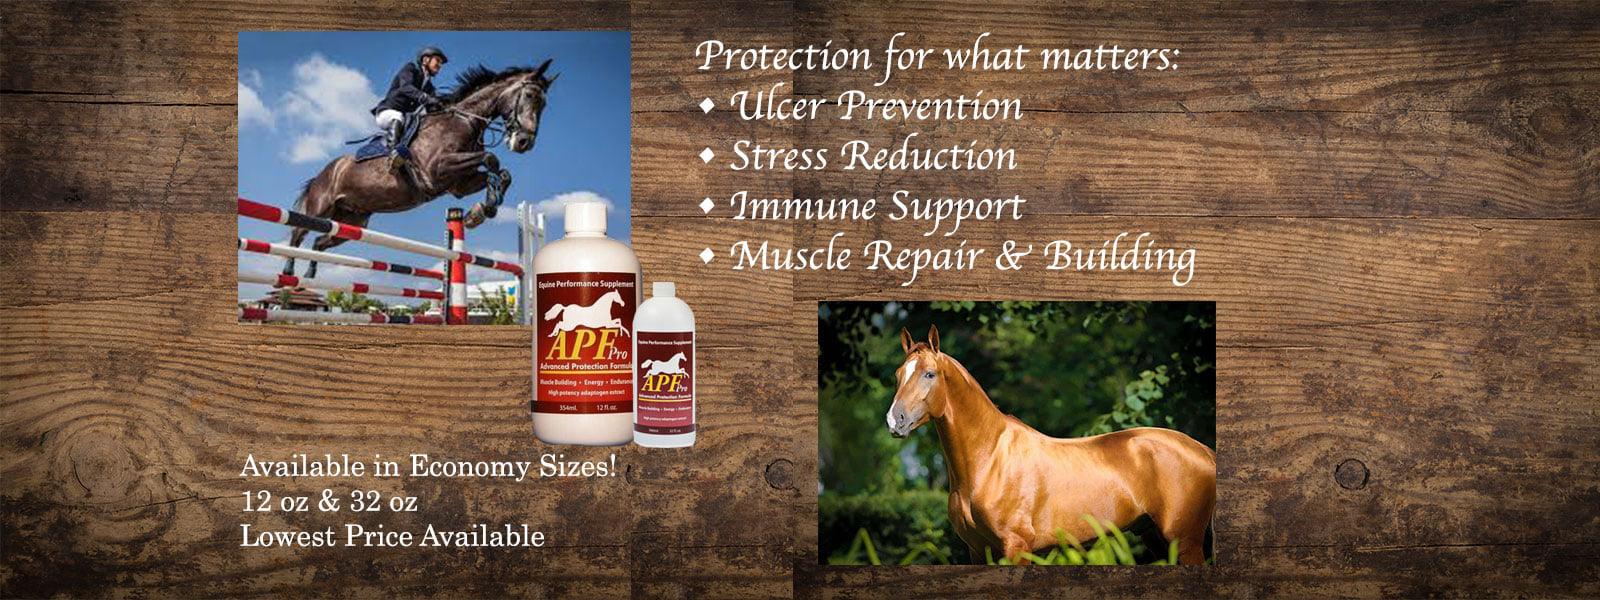 Benefits of APF PRO EQUINE PERFORMANCE SUPPLEMENT - Wilsun Custom Horse Blankets & Fine Horse Accessories